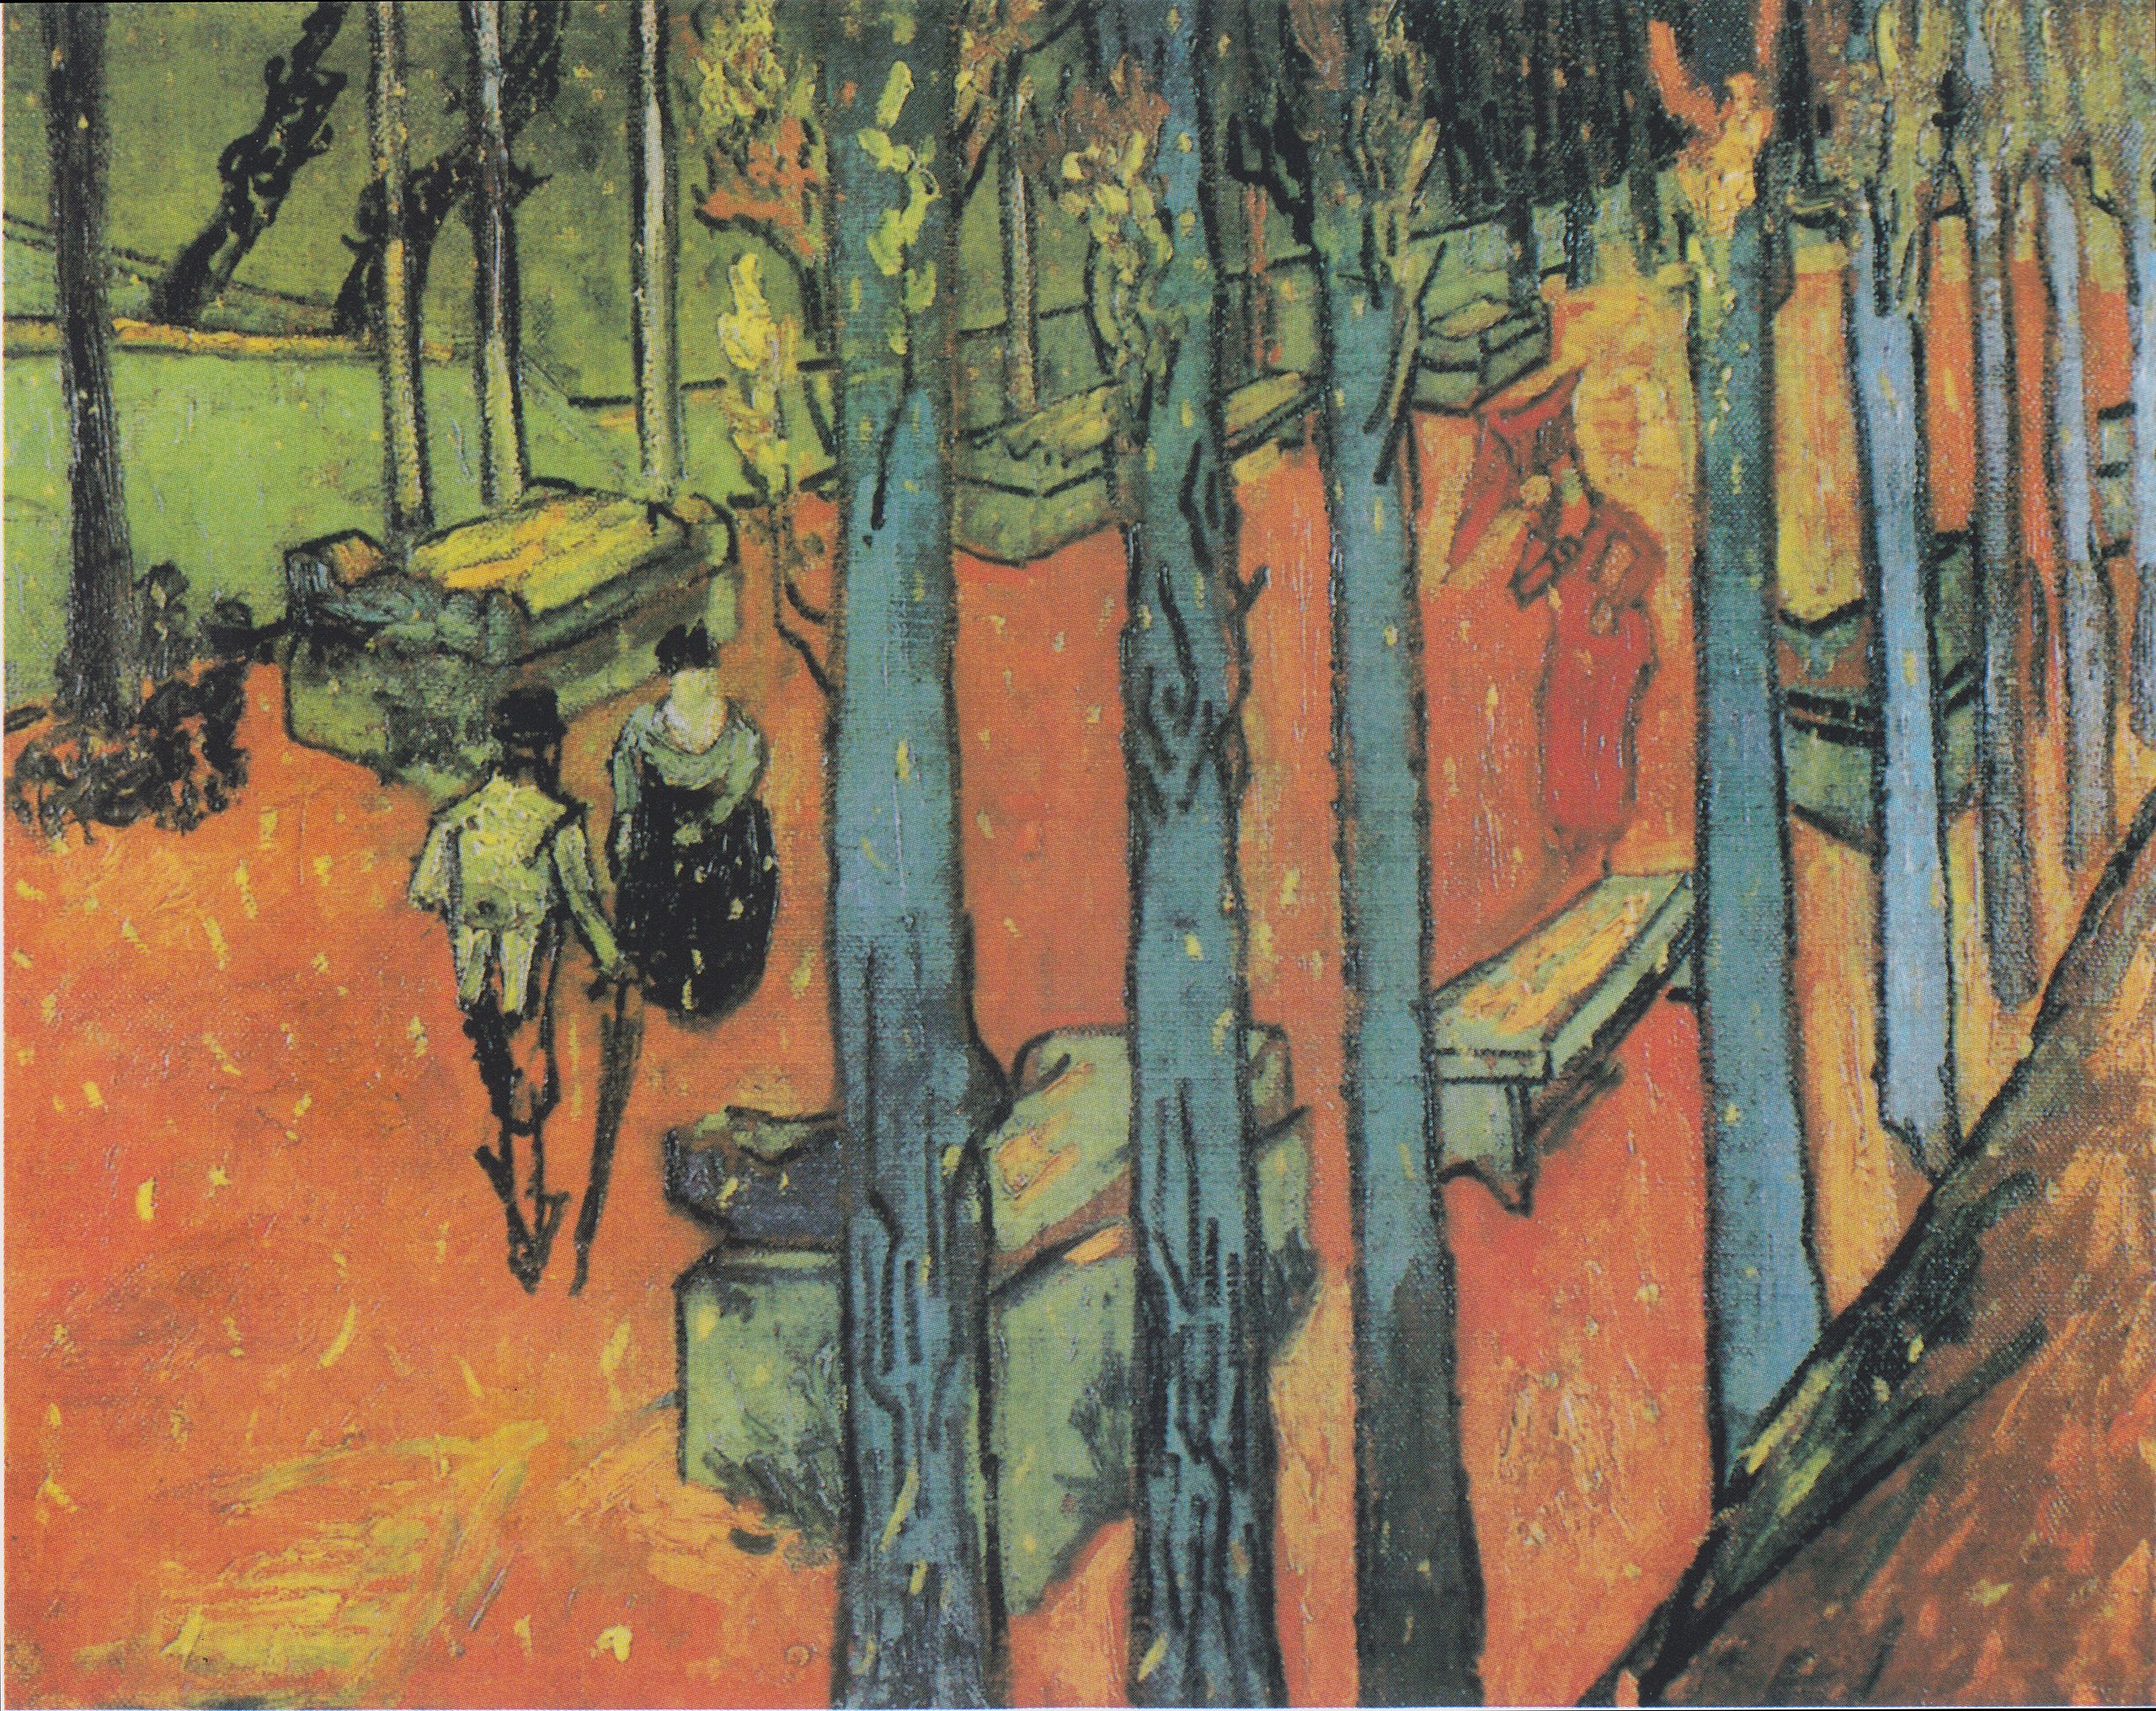 Padající listí (Les Alyscamps) by Vincent van Gogh - 1888 - 72,8 × 91,9 cm 